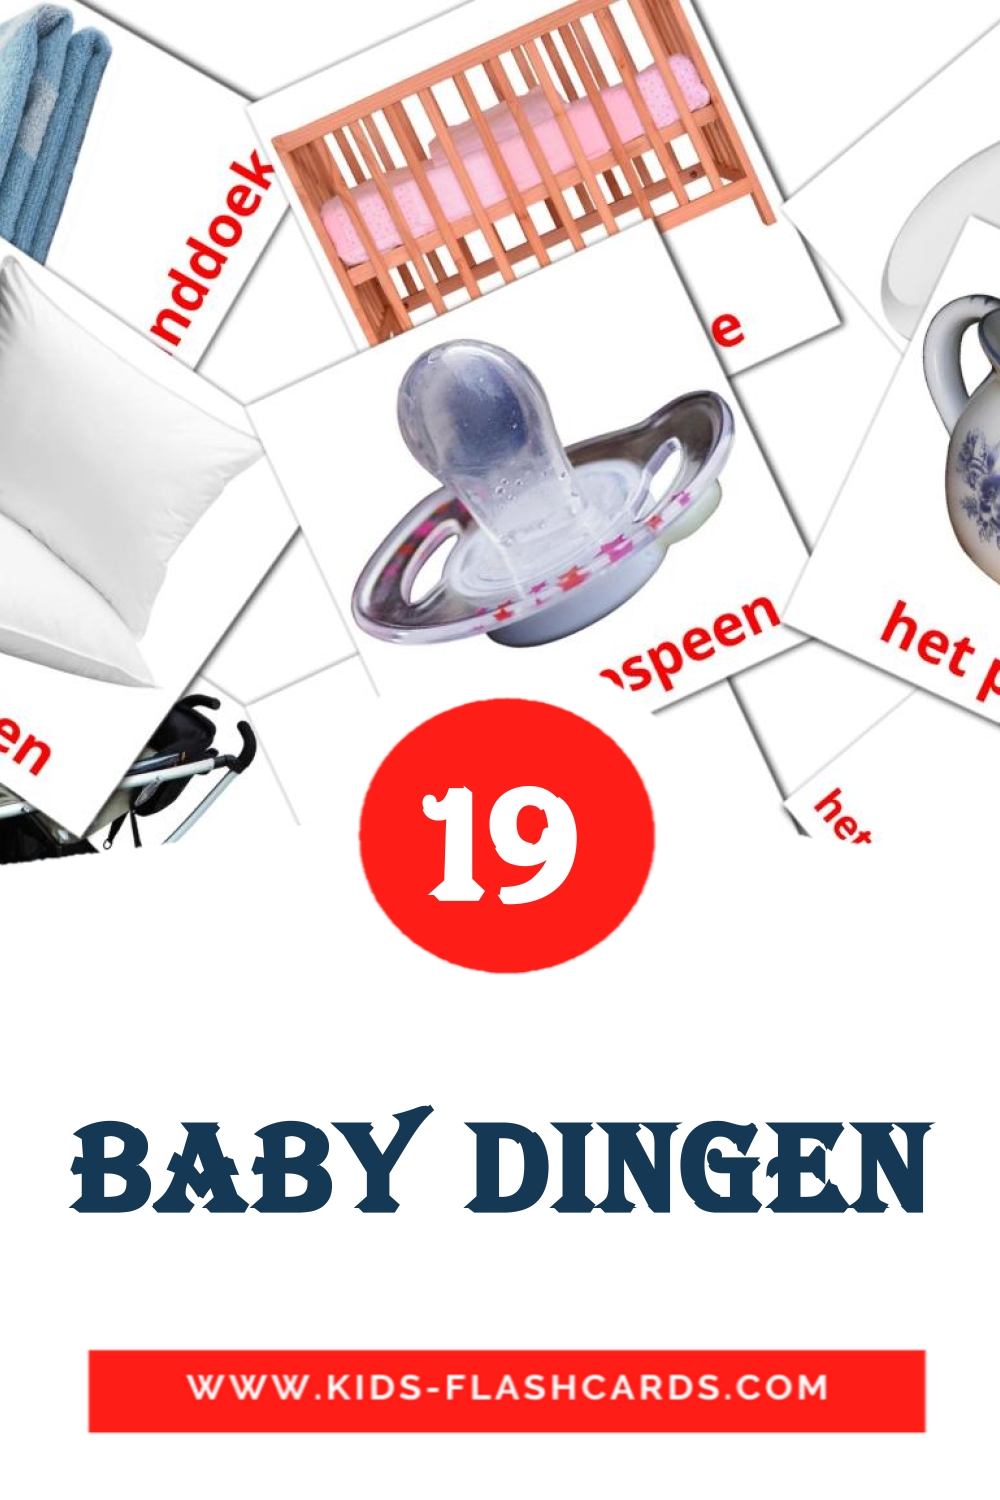 19 carte illustrate di Baby dingen per la scuola materna in olandese